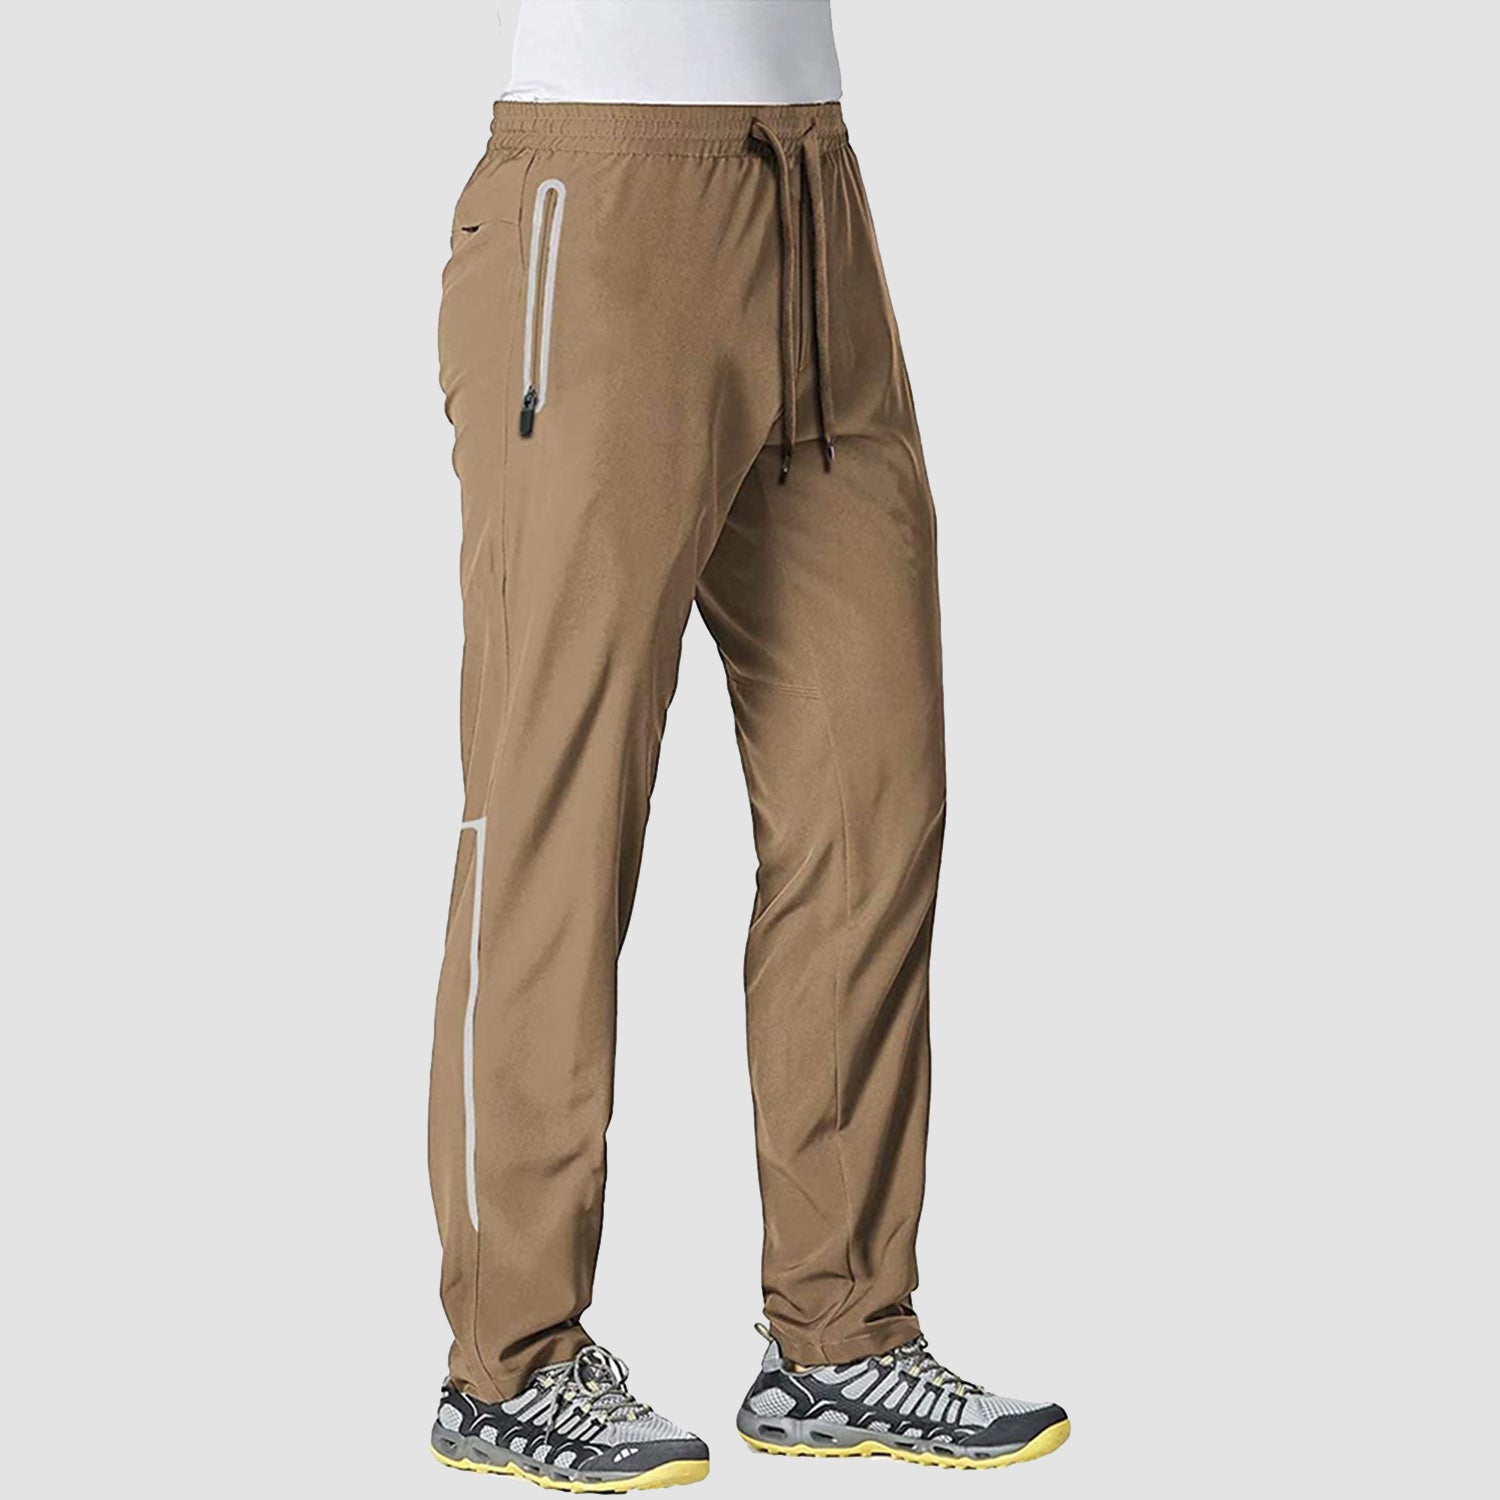 Men Quick Dry Reflective Stripe Zip Pocket Fitness Training Pants